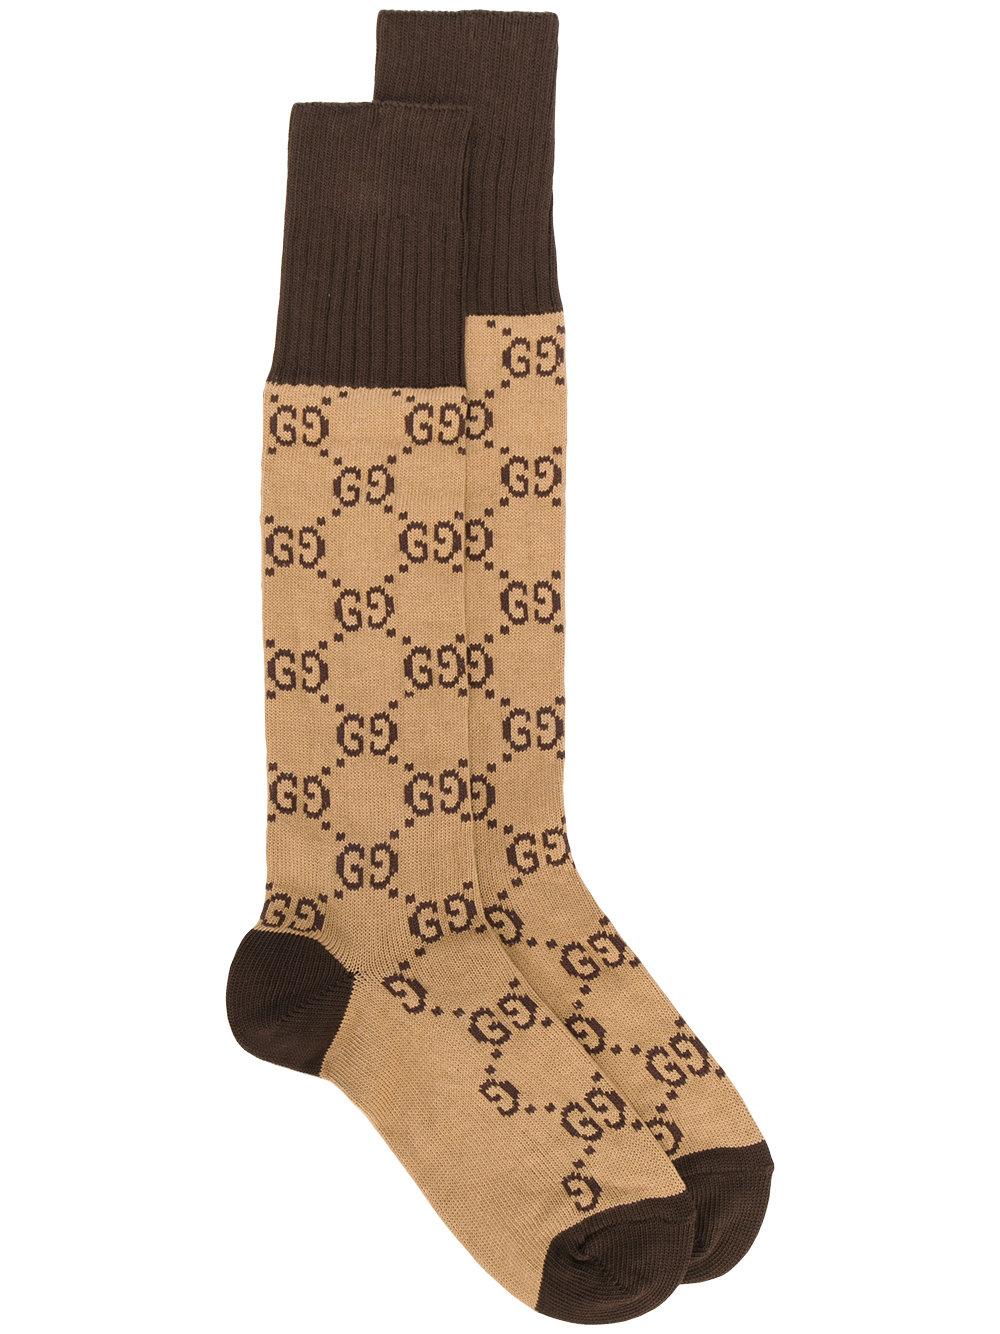 Gucci Cotton Gg Supreme Print Socks in Natural for Men - Lyst